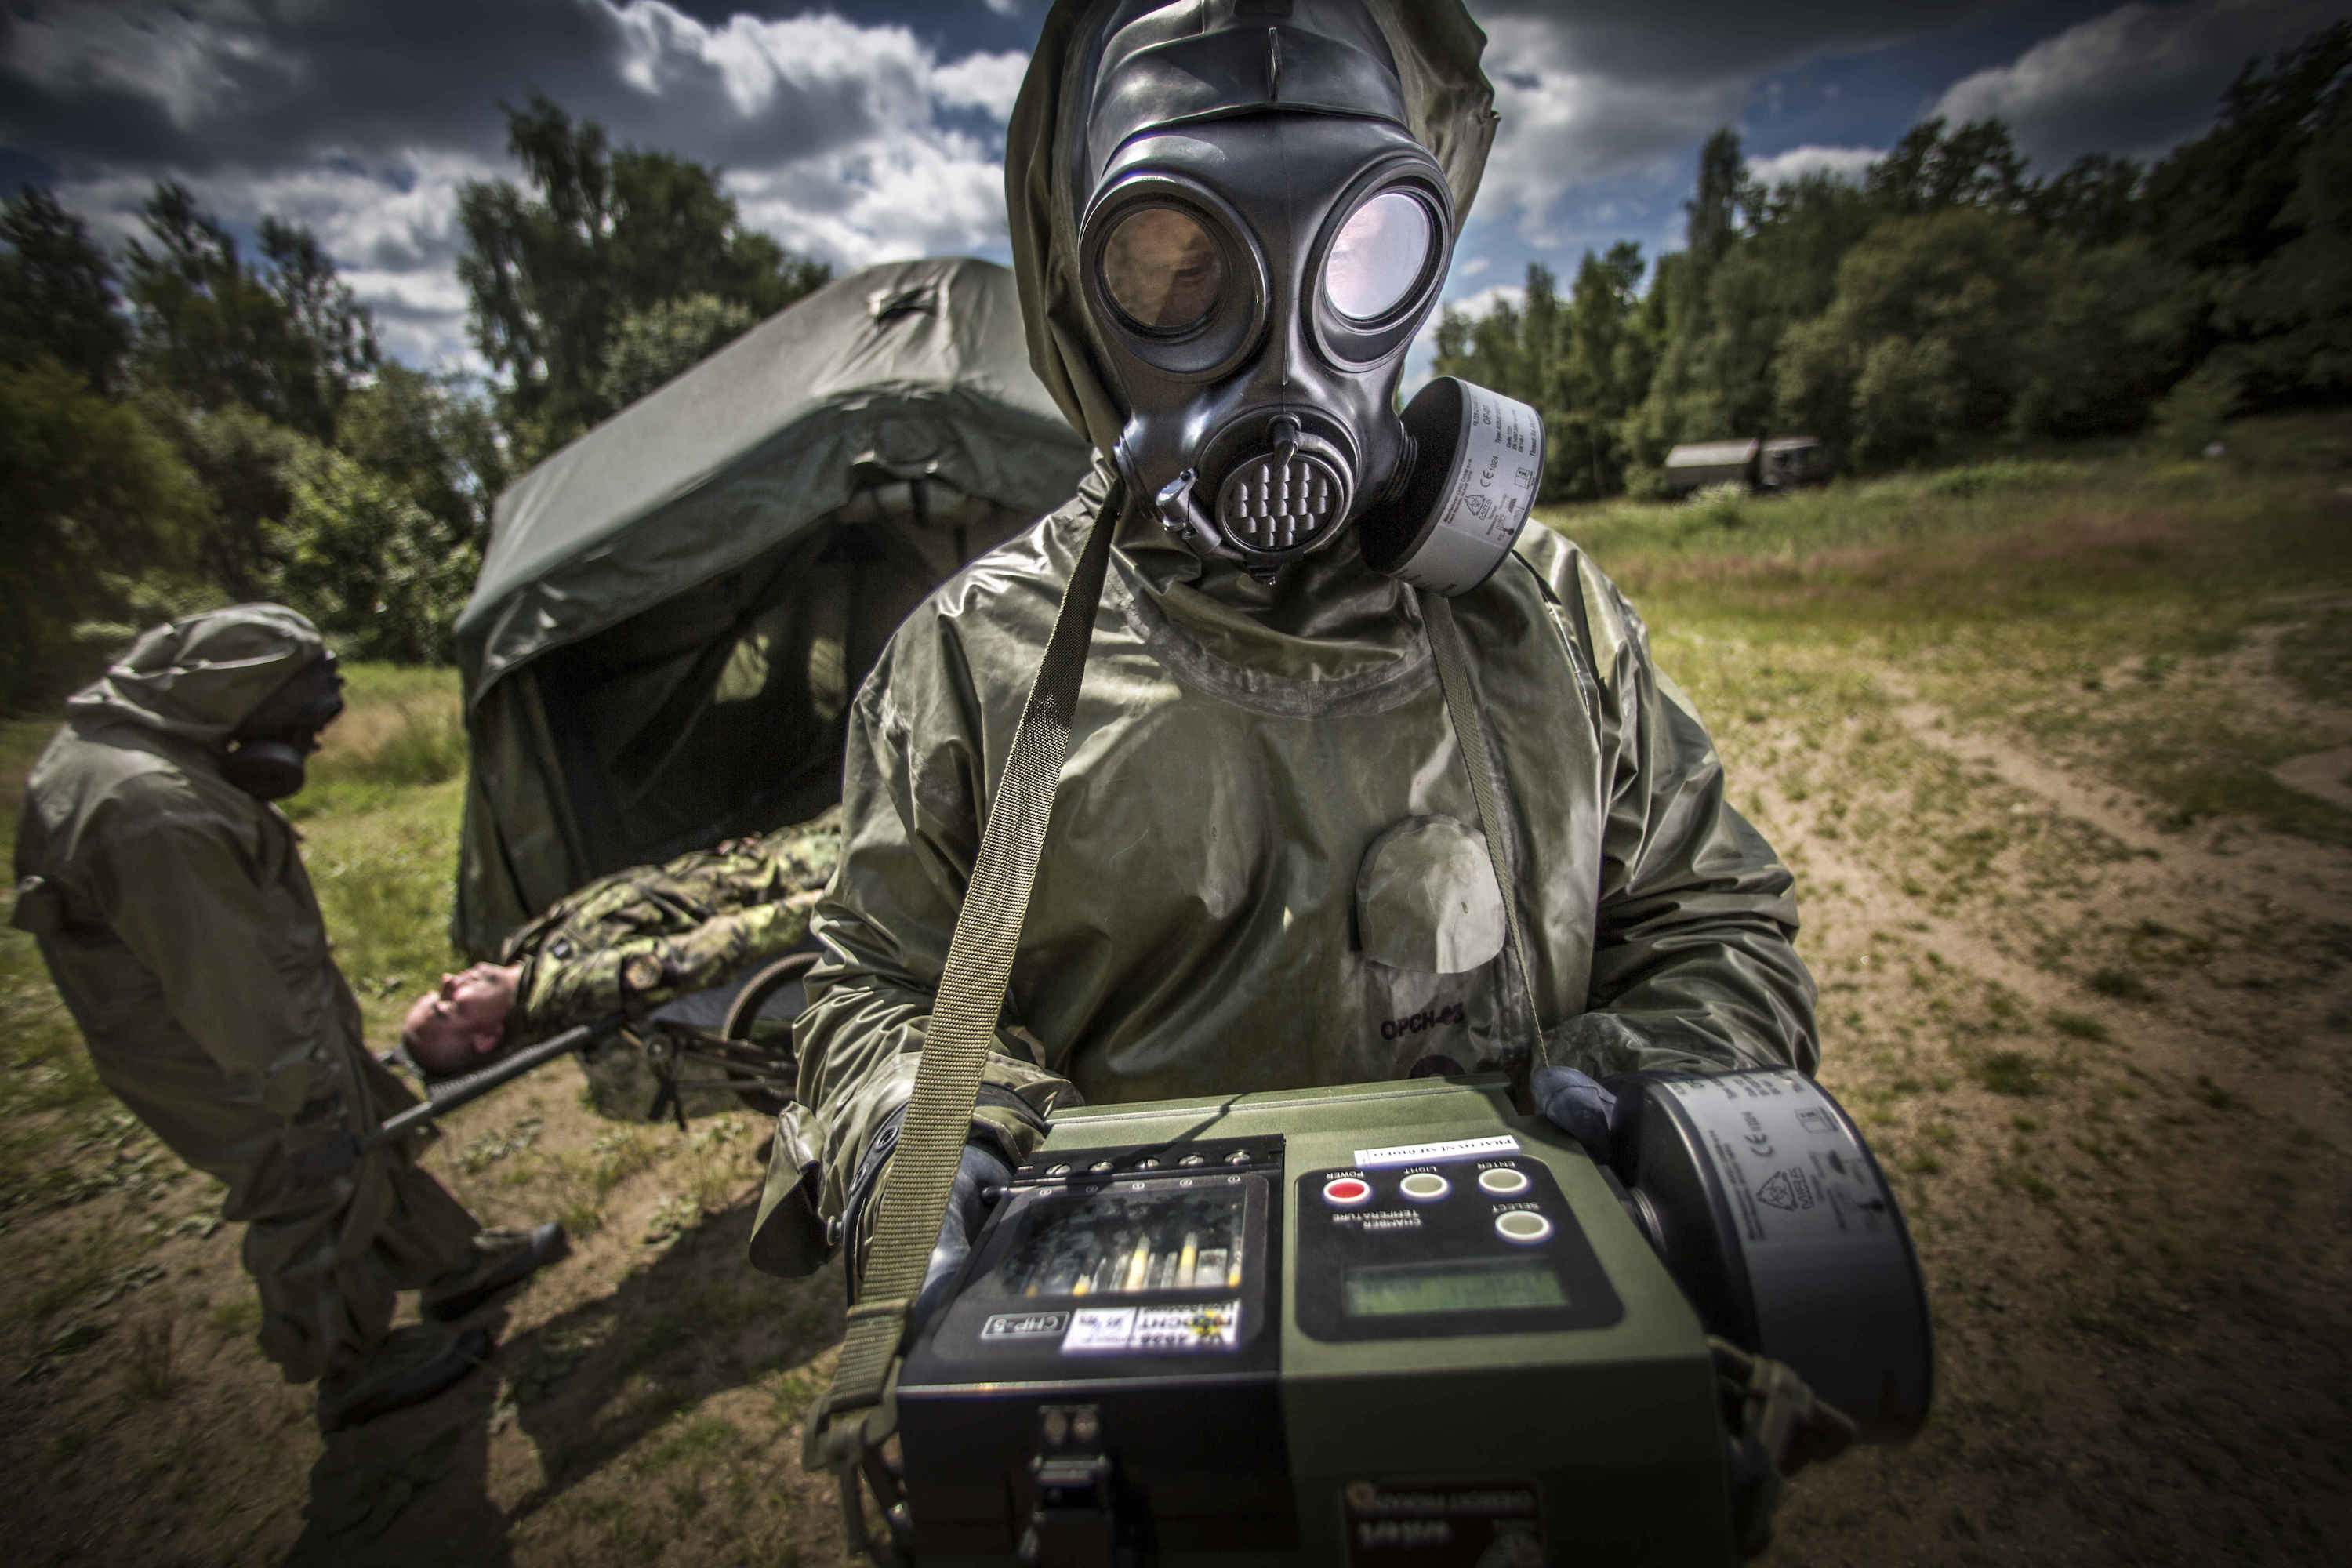 CM-7M Military Gas Mask | Chemical Warfare Gas Masks | MIRA Safety